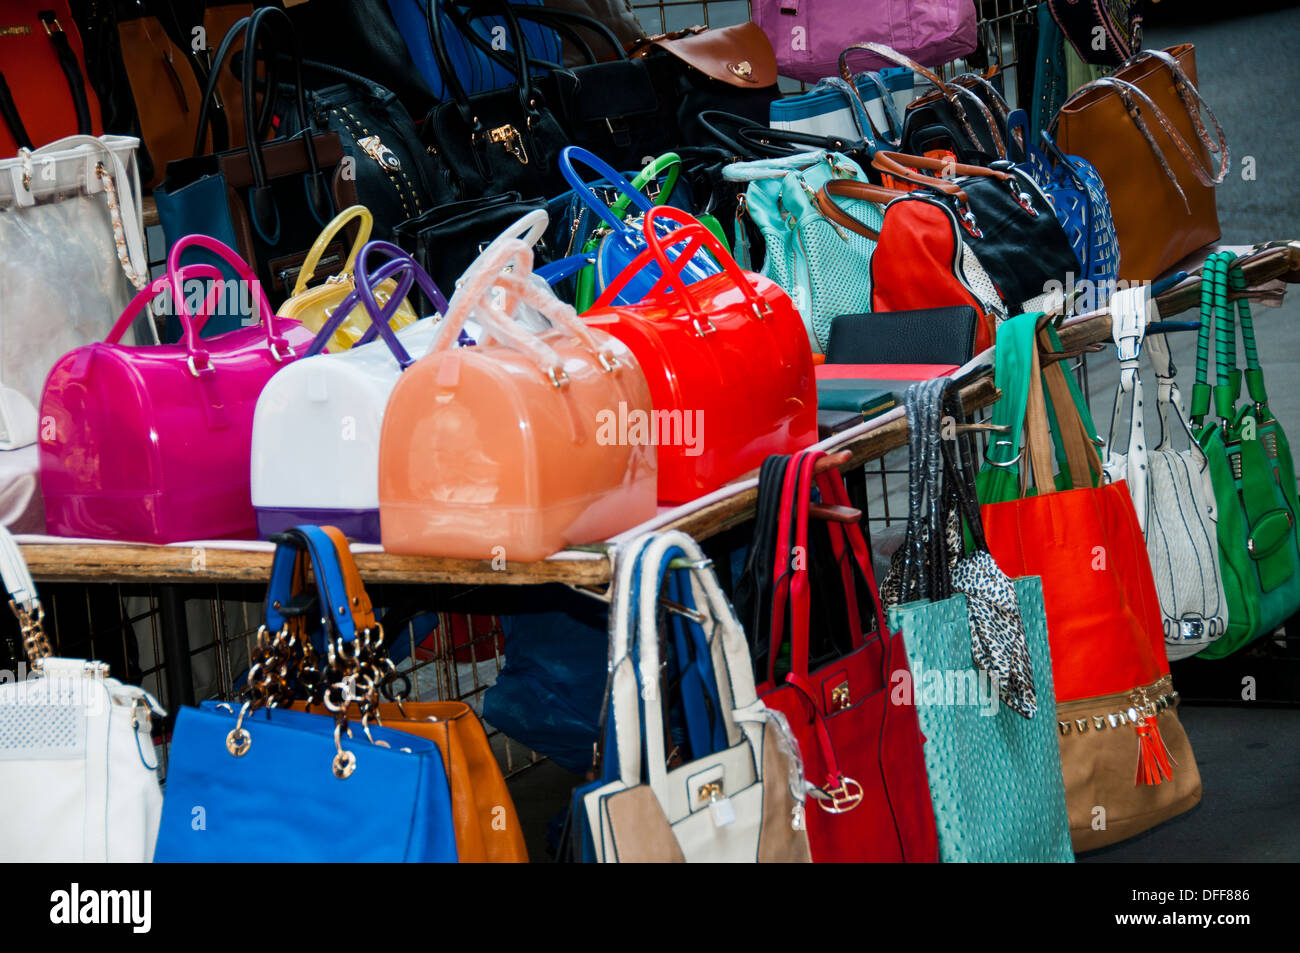 Dozens of fake designer purse vendors selling knock-offs to NYC